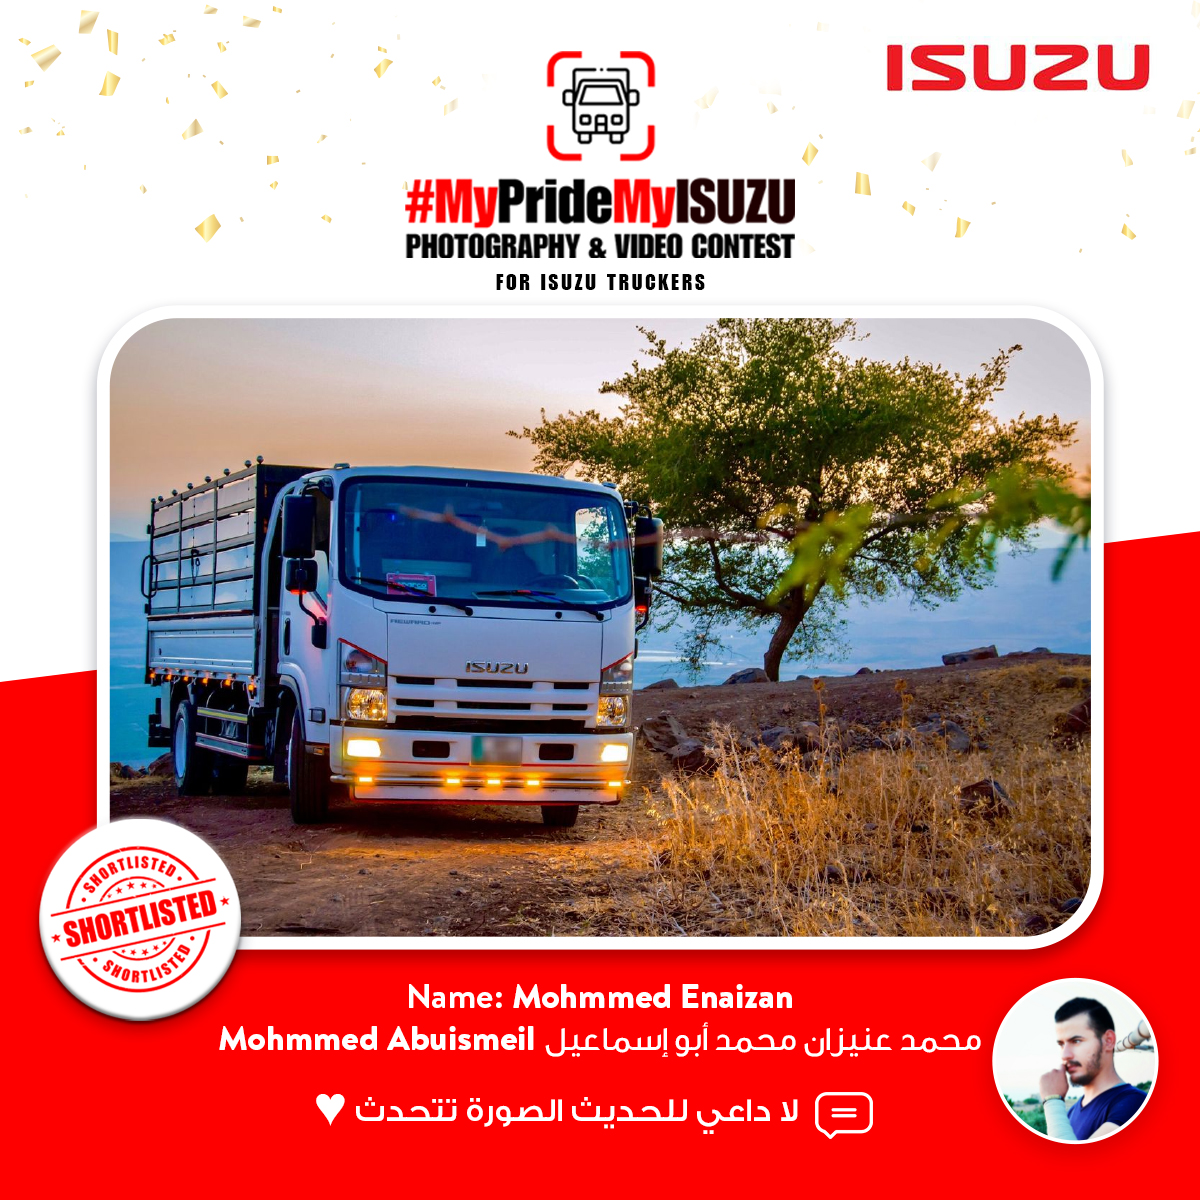 Entry 5 #MyPrideMyIsuzu محمد عنيزان محمد أبو إسماعيل